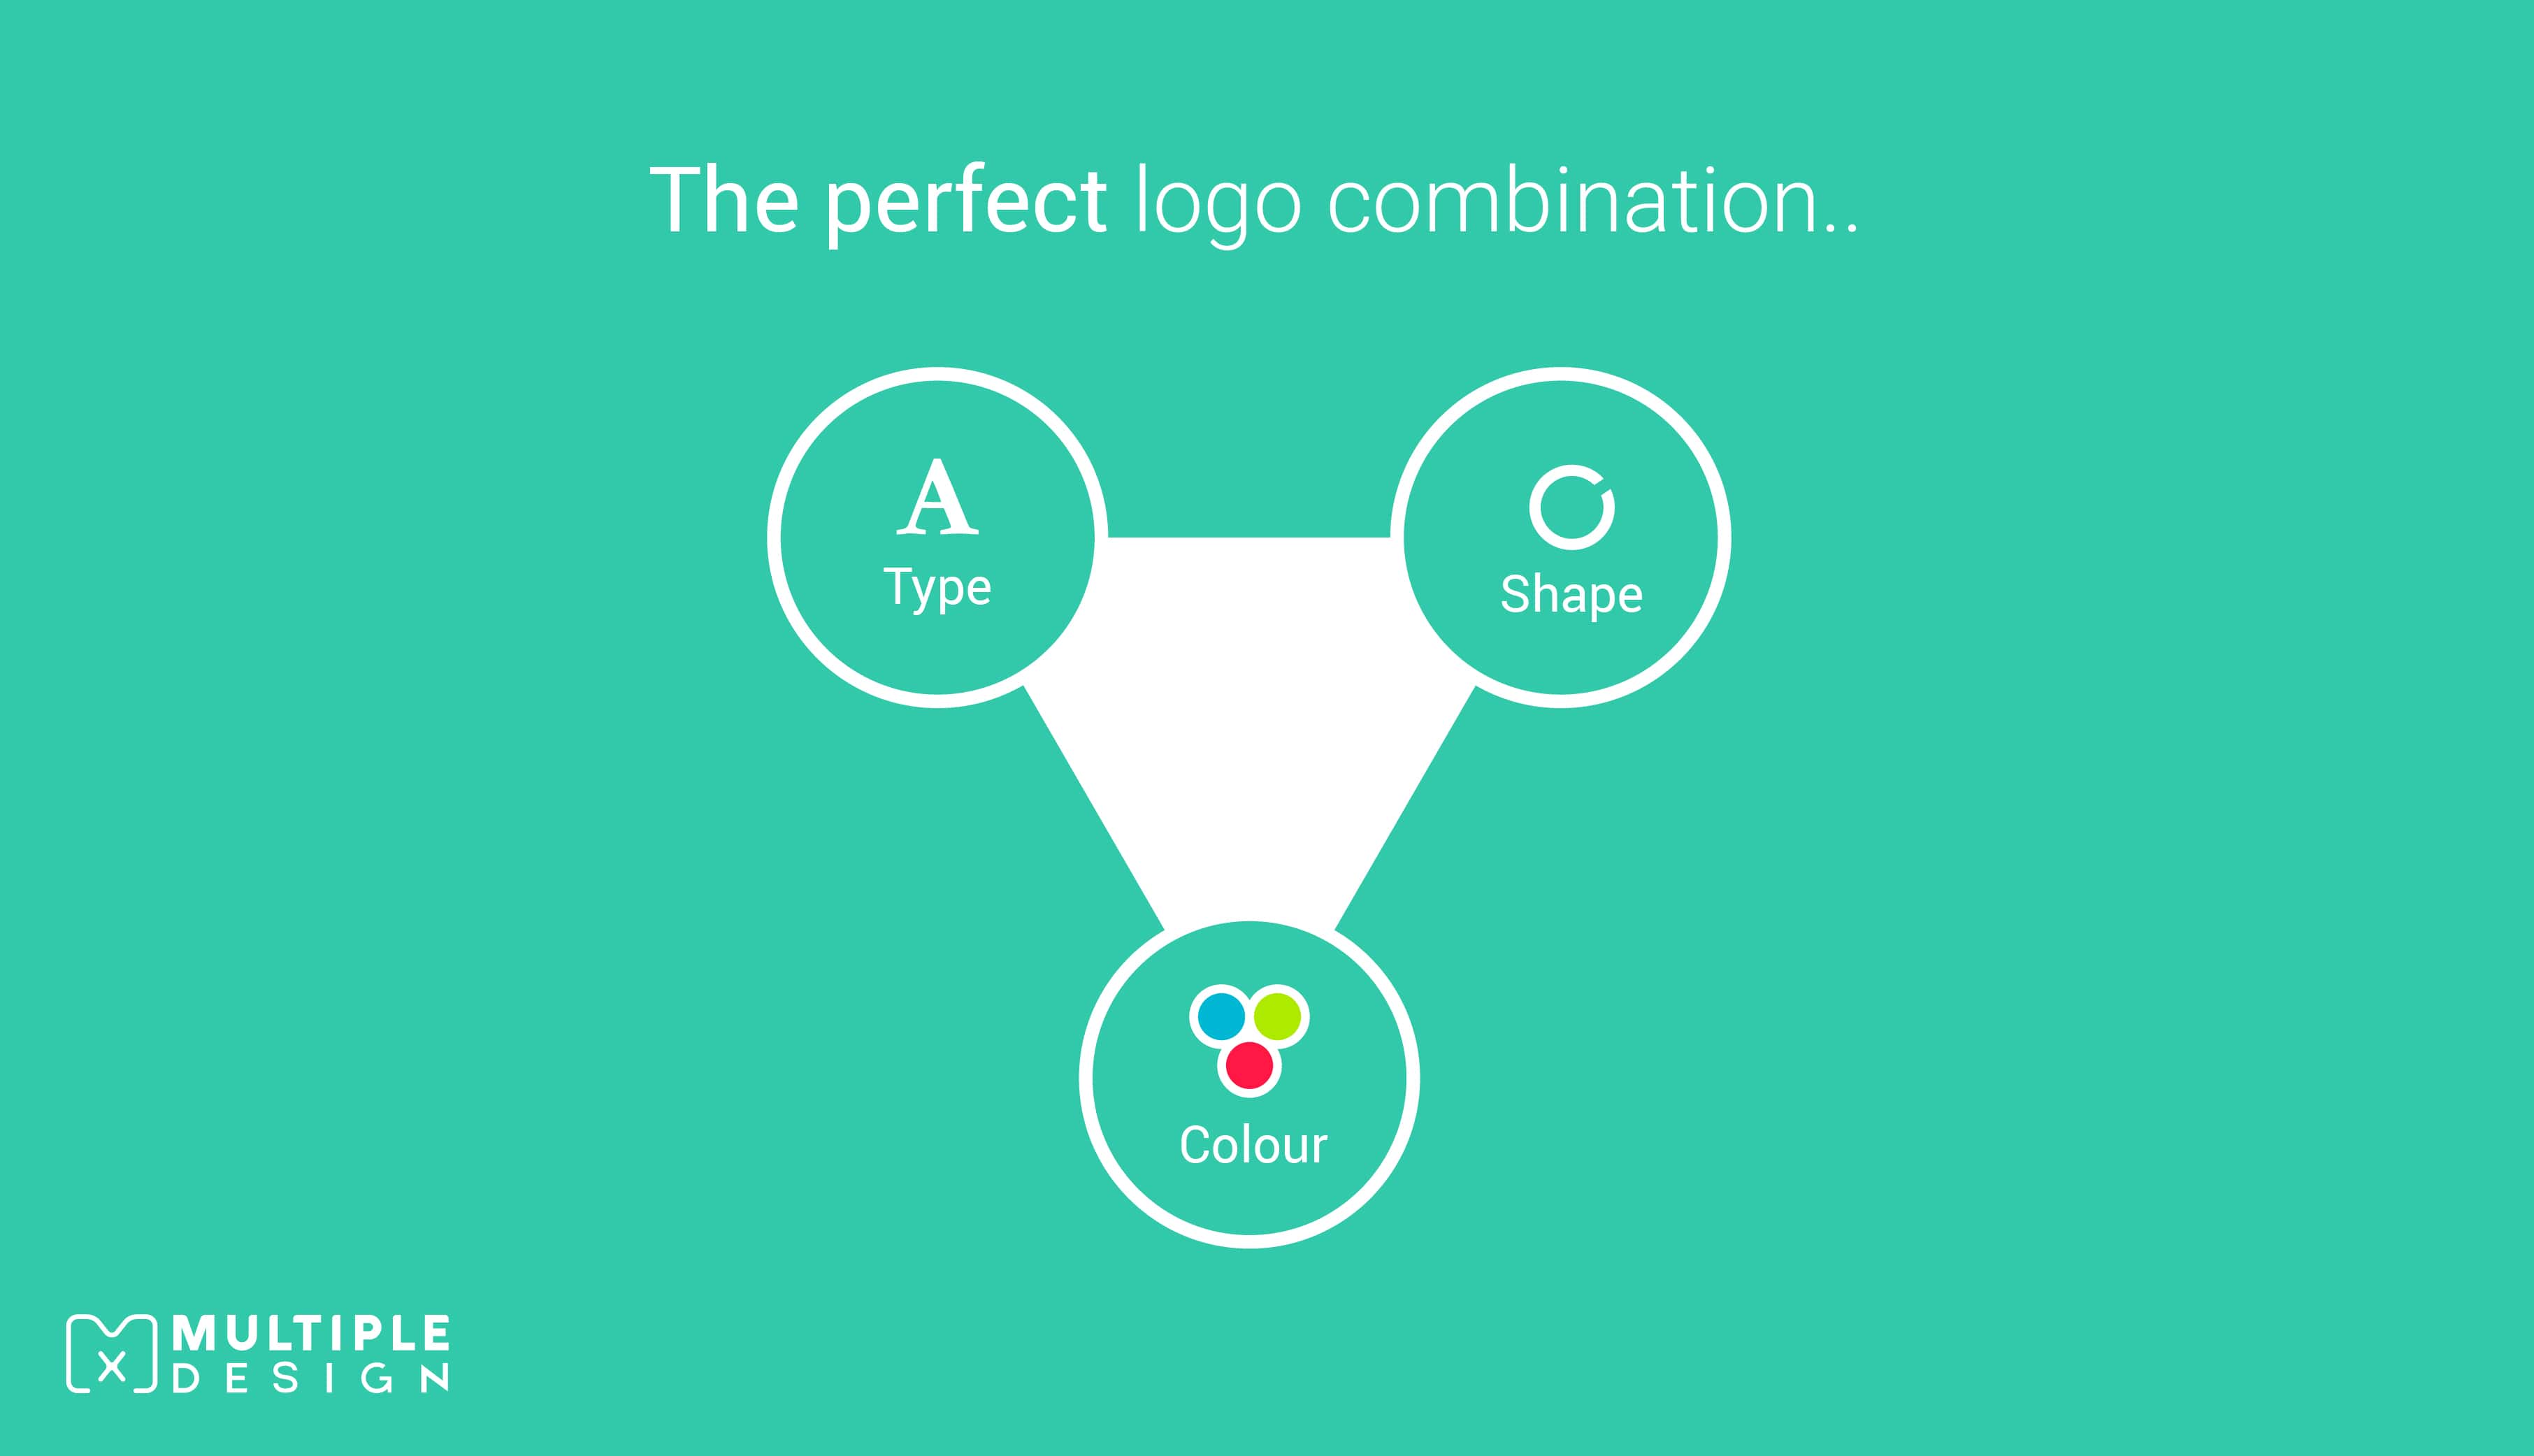 The perfect logo combination - shape, colour, type